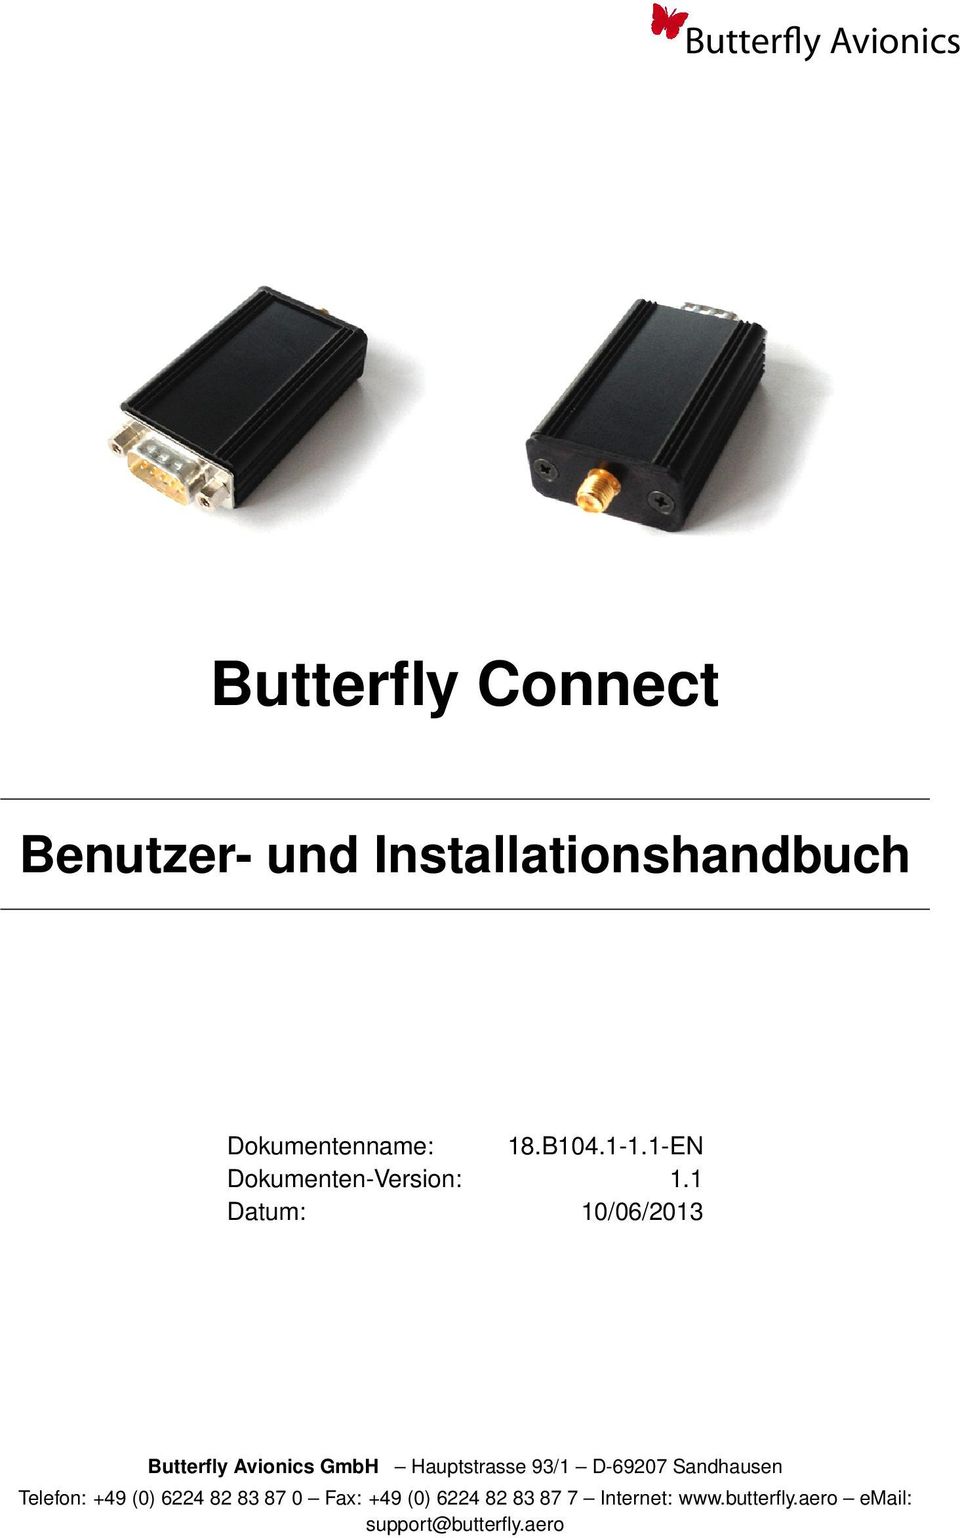 1 10/06/2013 Butterfly Avionics GmbH Hauptstrasse 93/1 D-69207 Sandhausen Telefon: